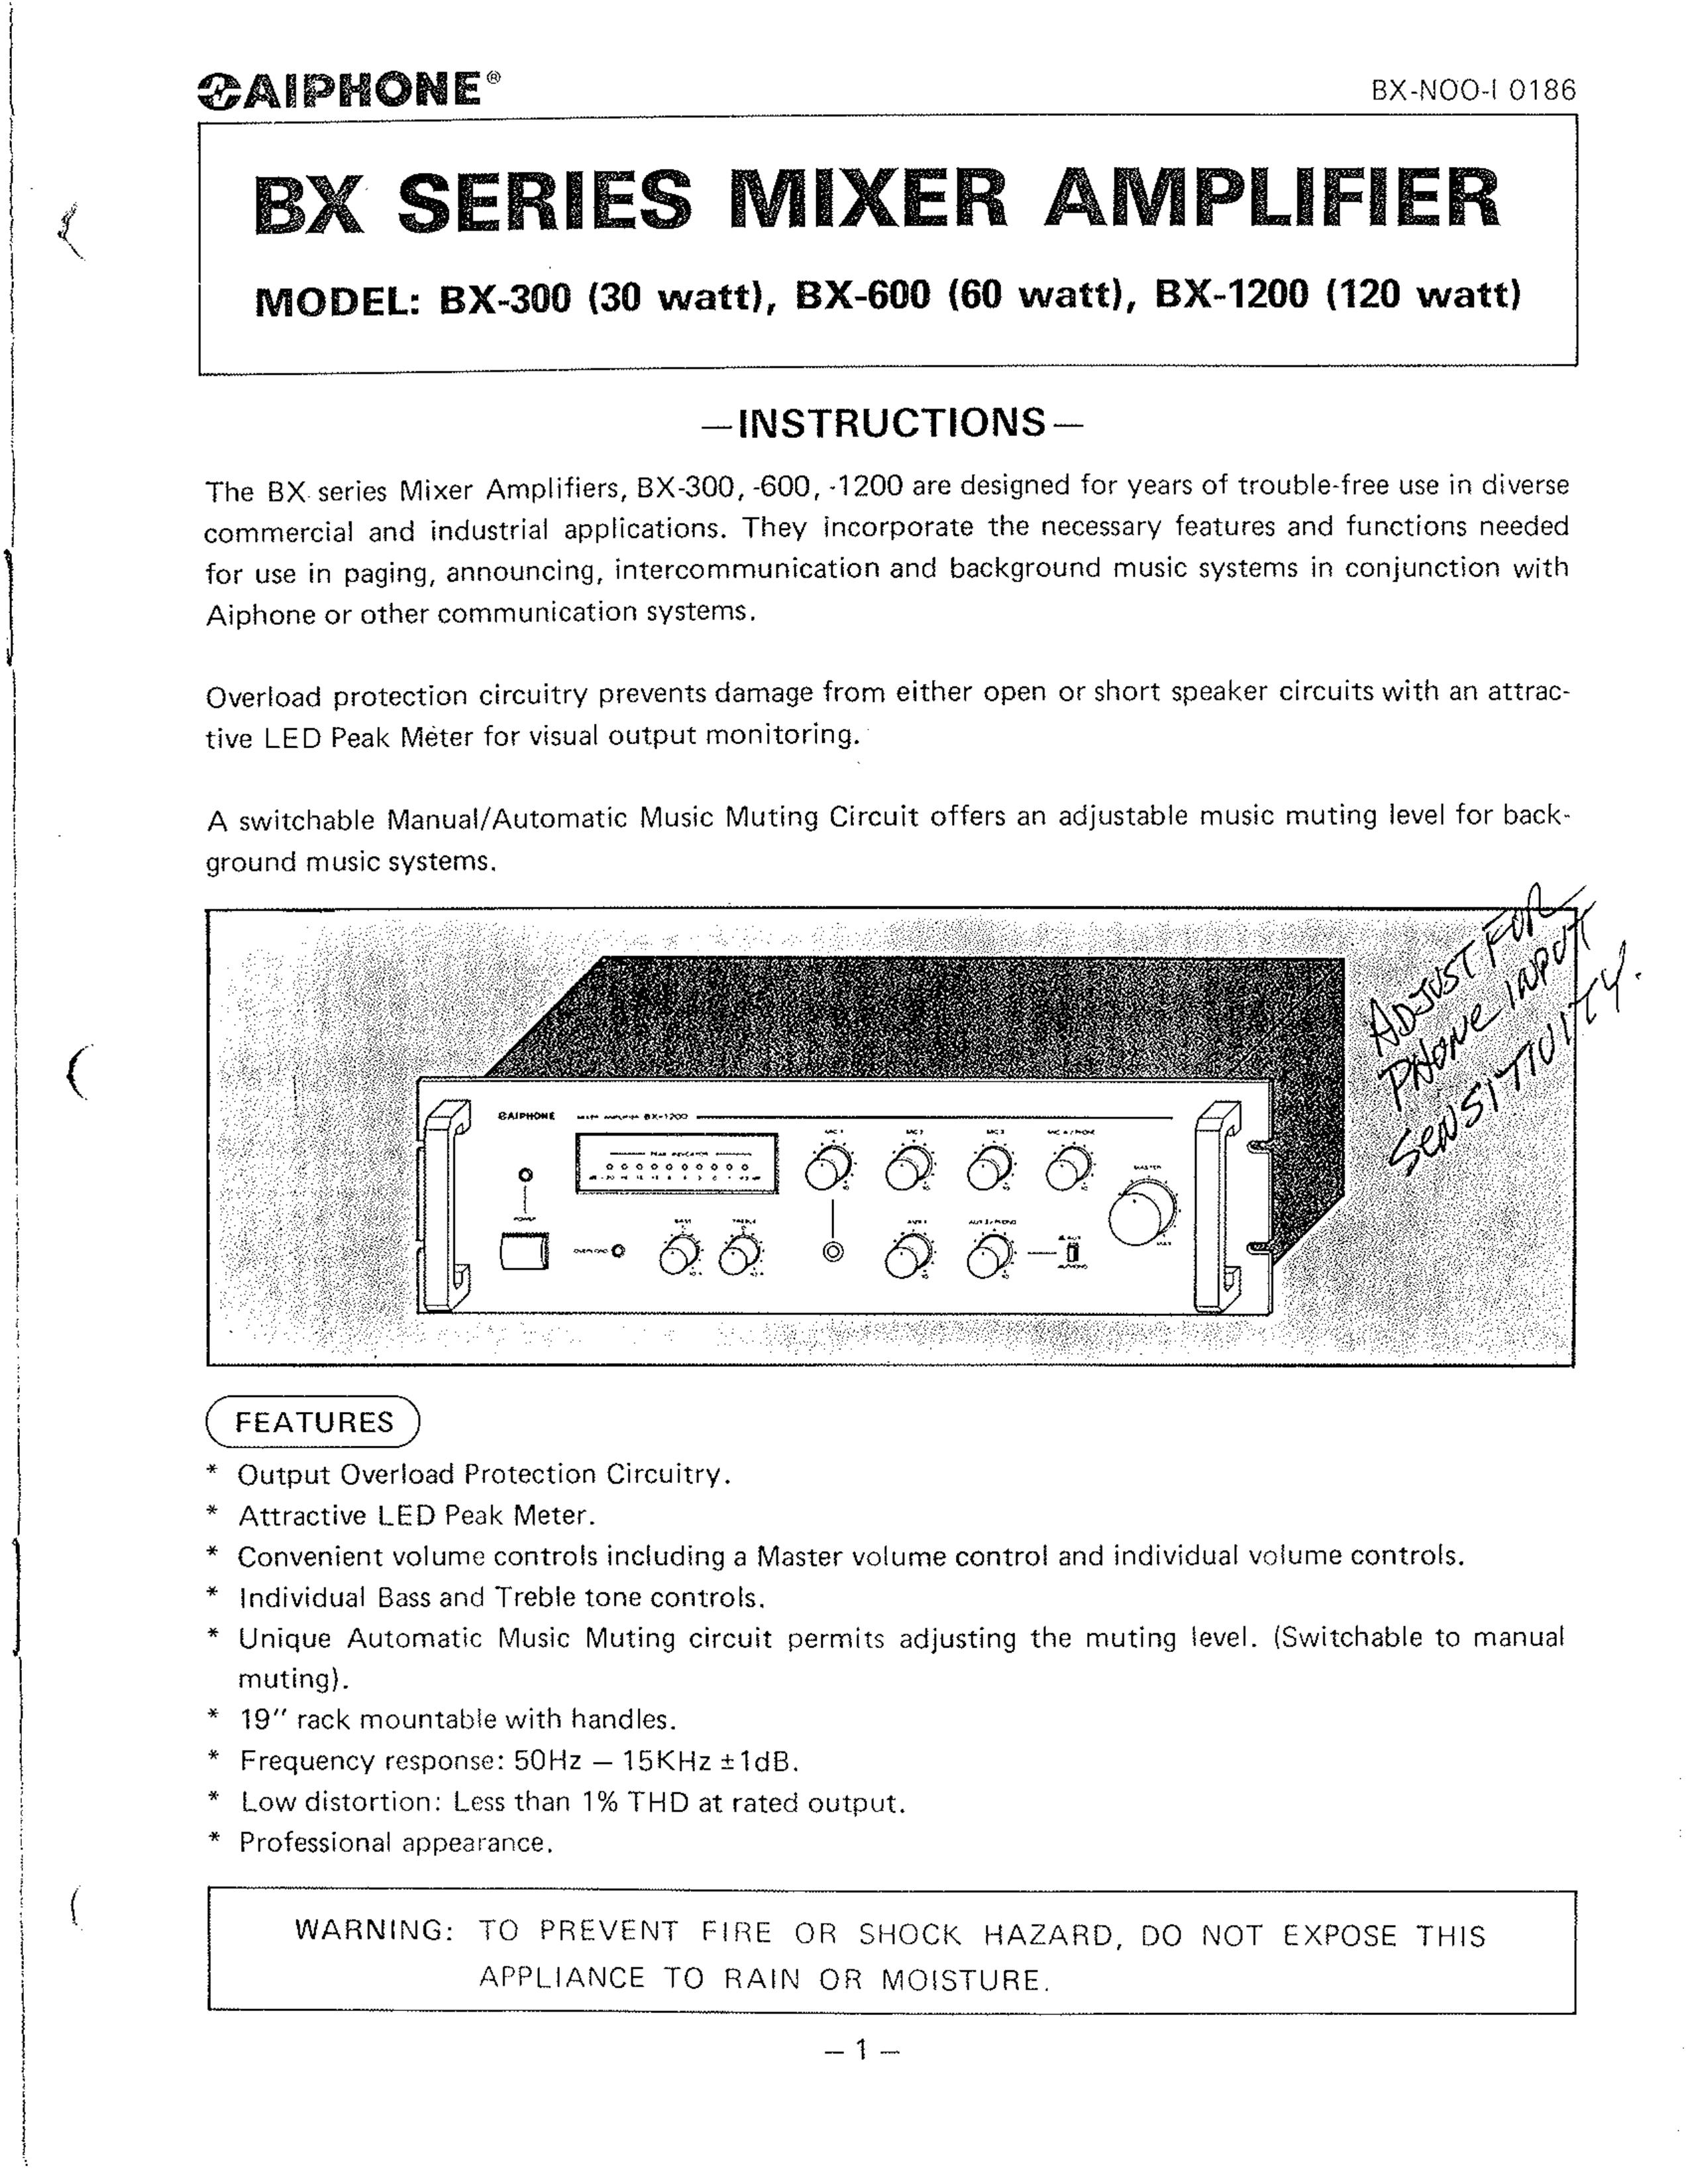 Aiphone BX-1200 Music Mixer User Manual